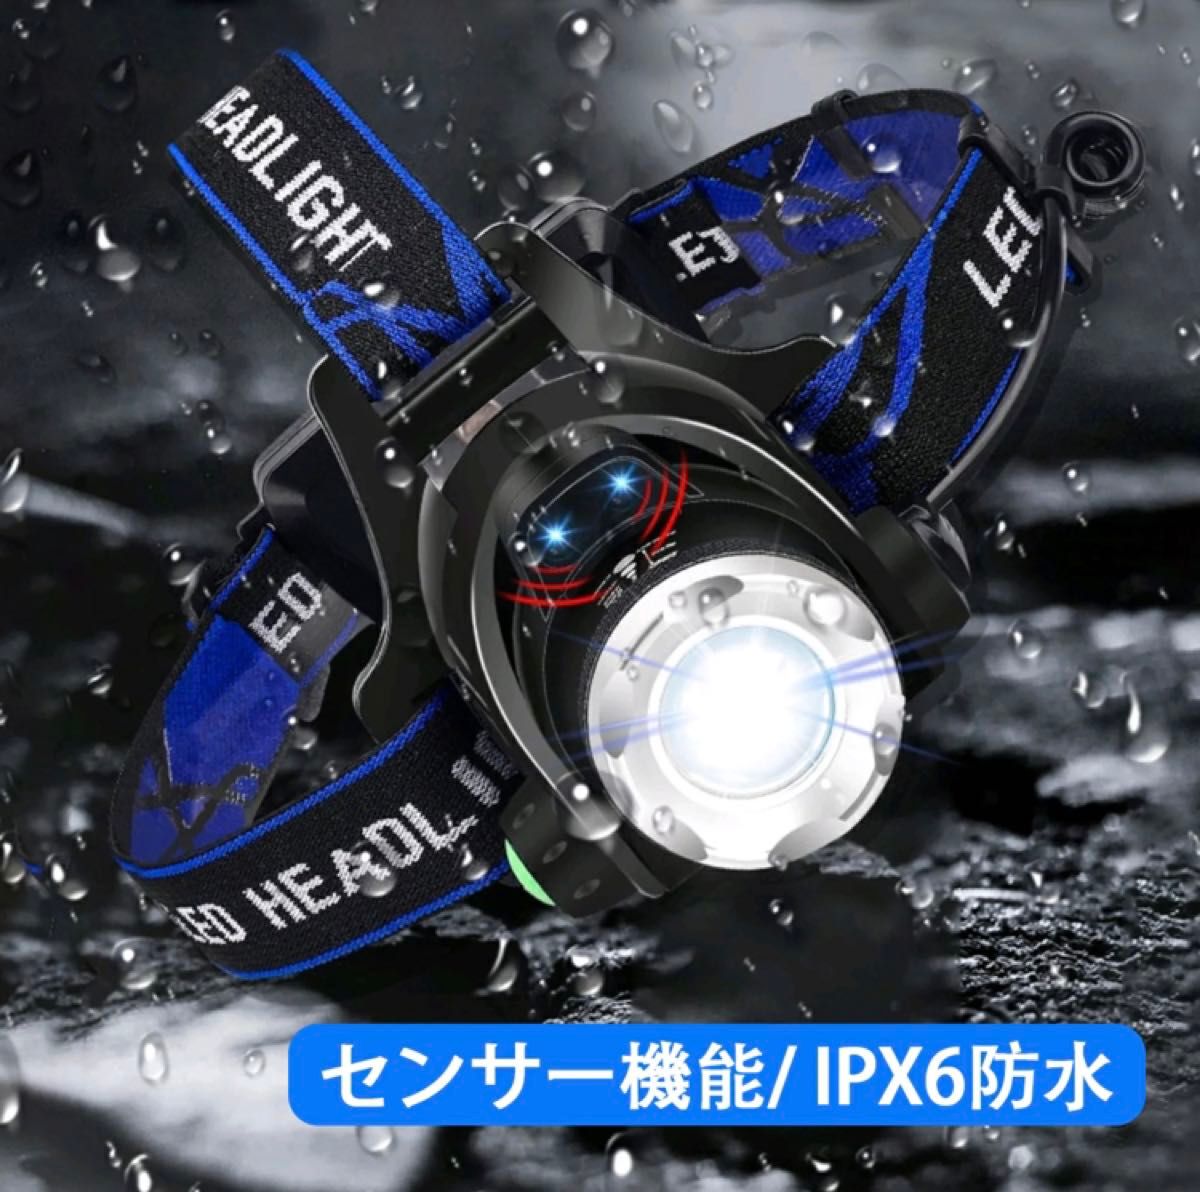 LEDヘッドライト 充電式 高輝度 ヘッドランプ 人感センサー 防水 防災 ヘルメット ライト IPX6防水 ヘッド懐中電灯 H1